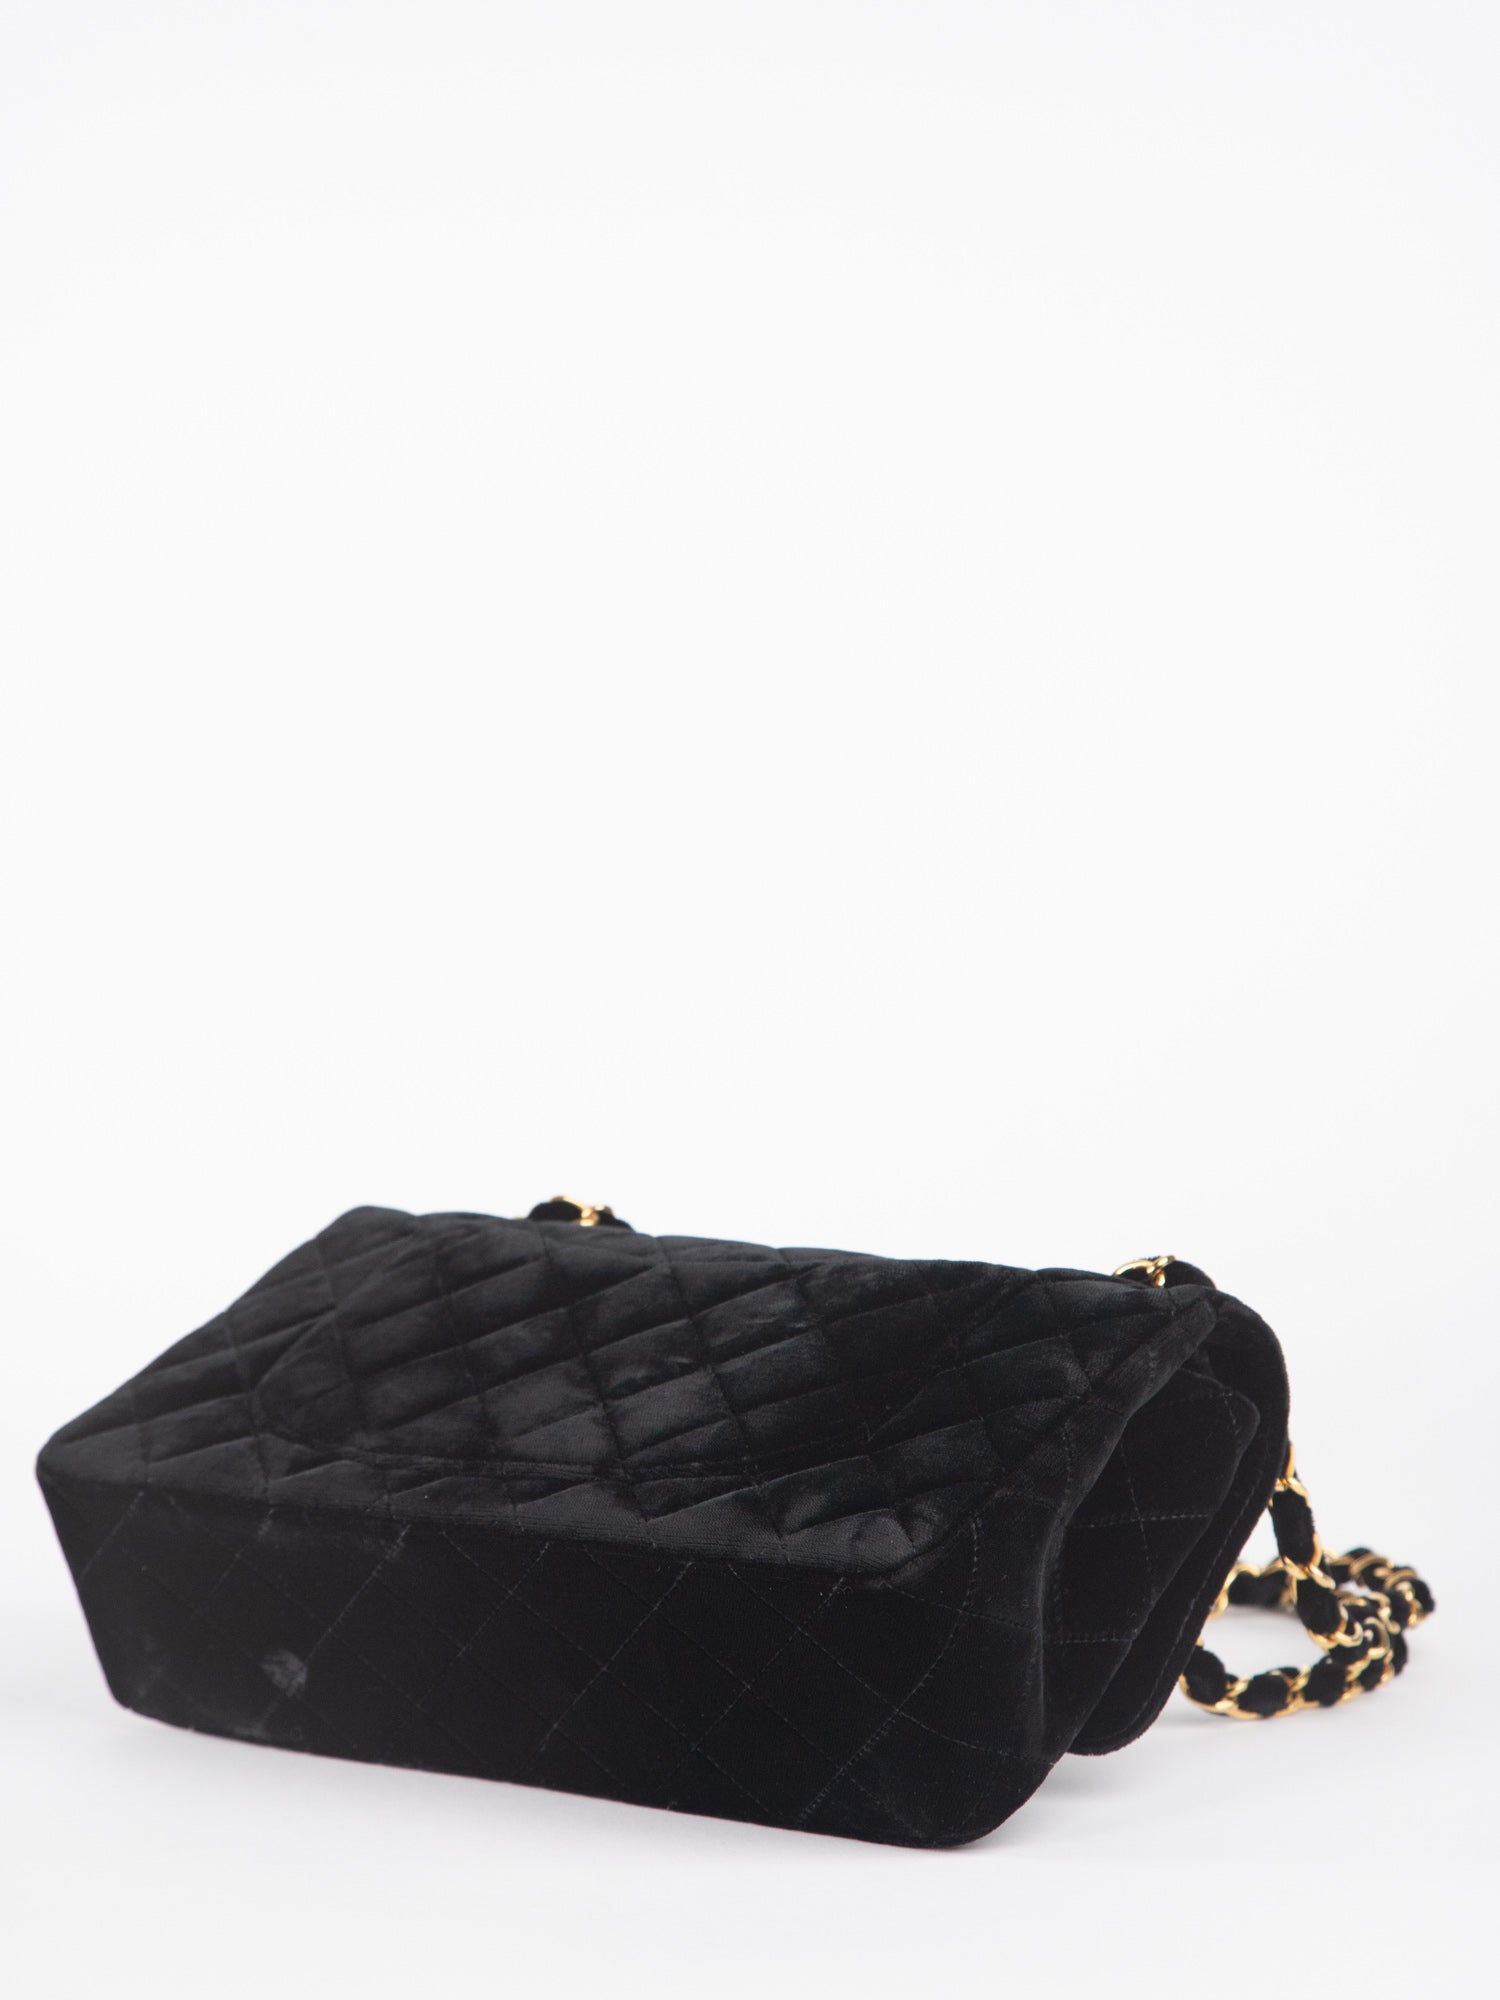 Classic black Chanel purse  Chanel handbags, Bags, Black chanel purse